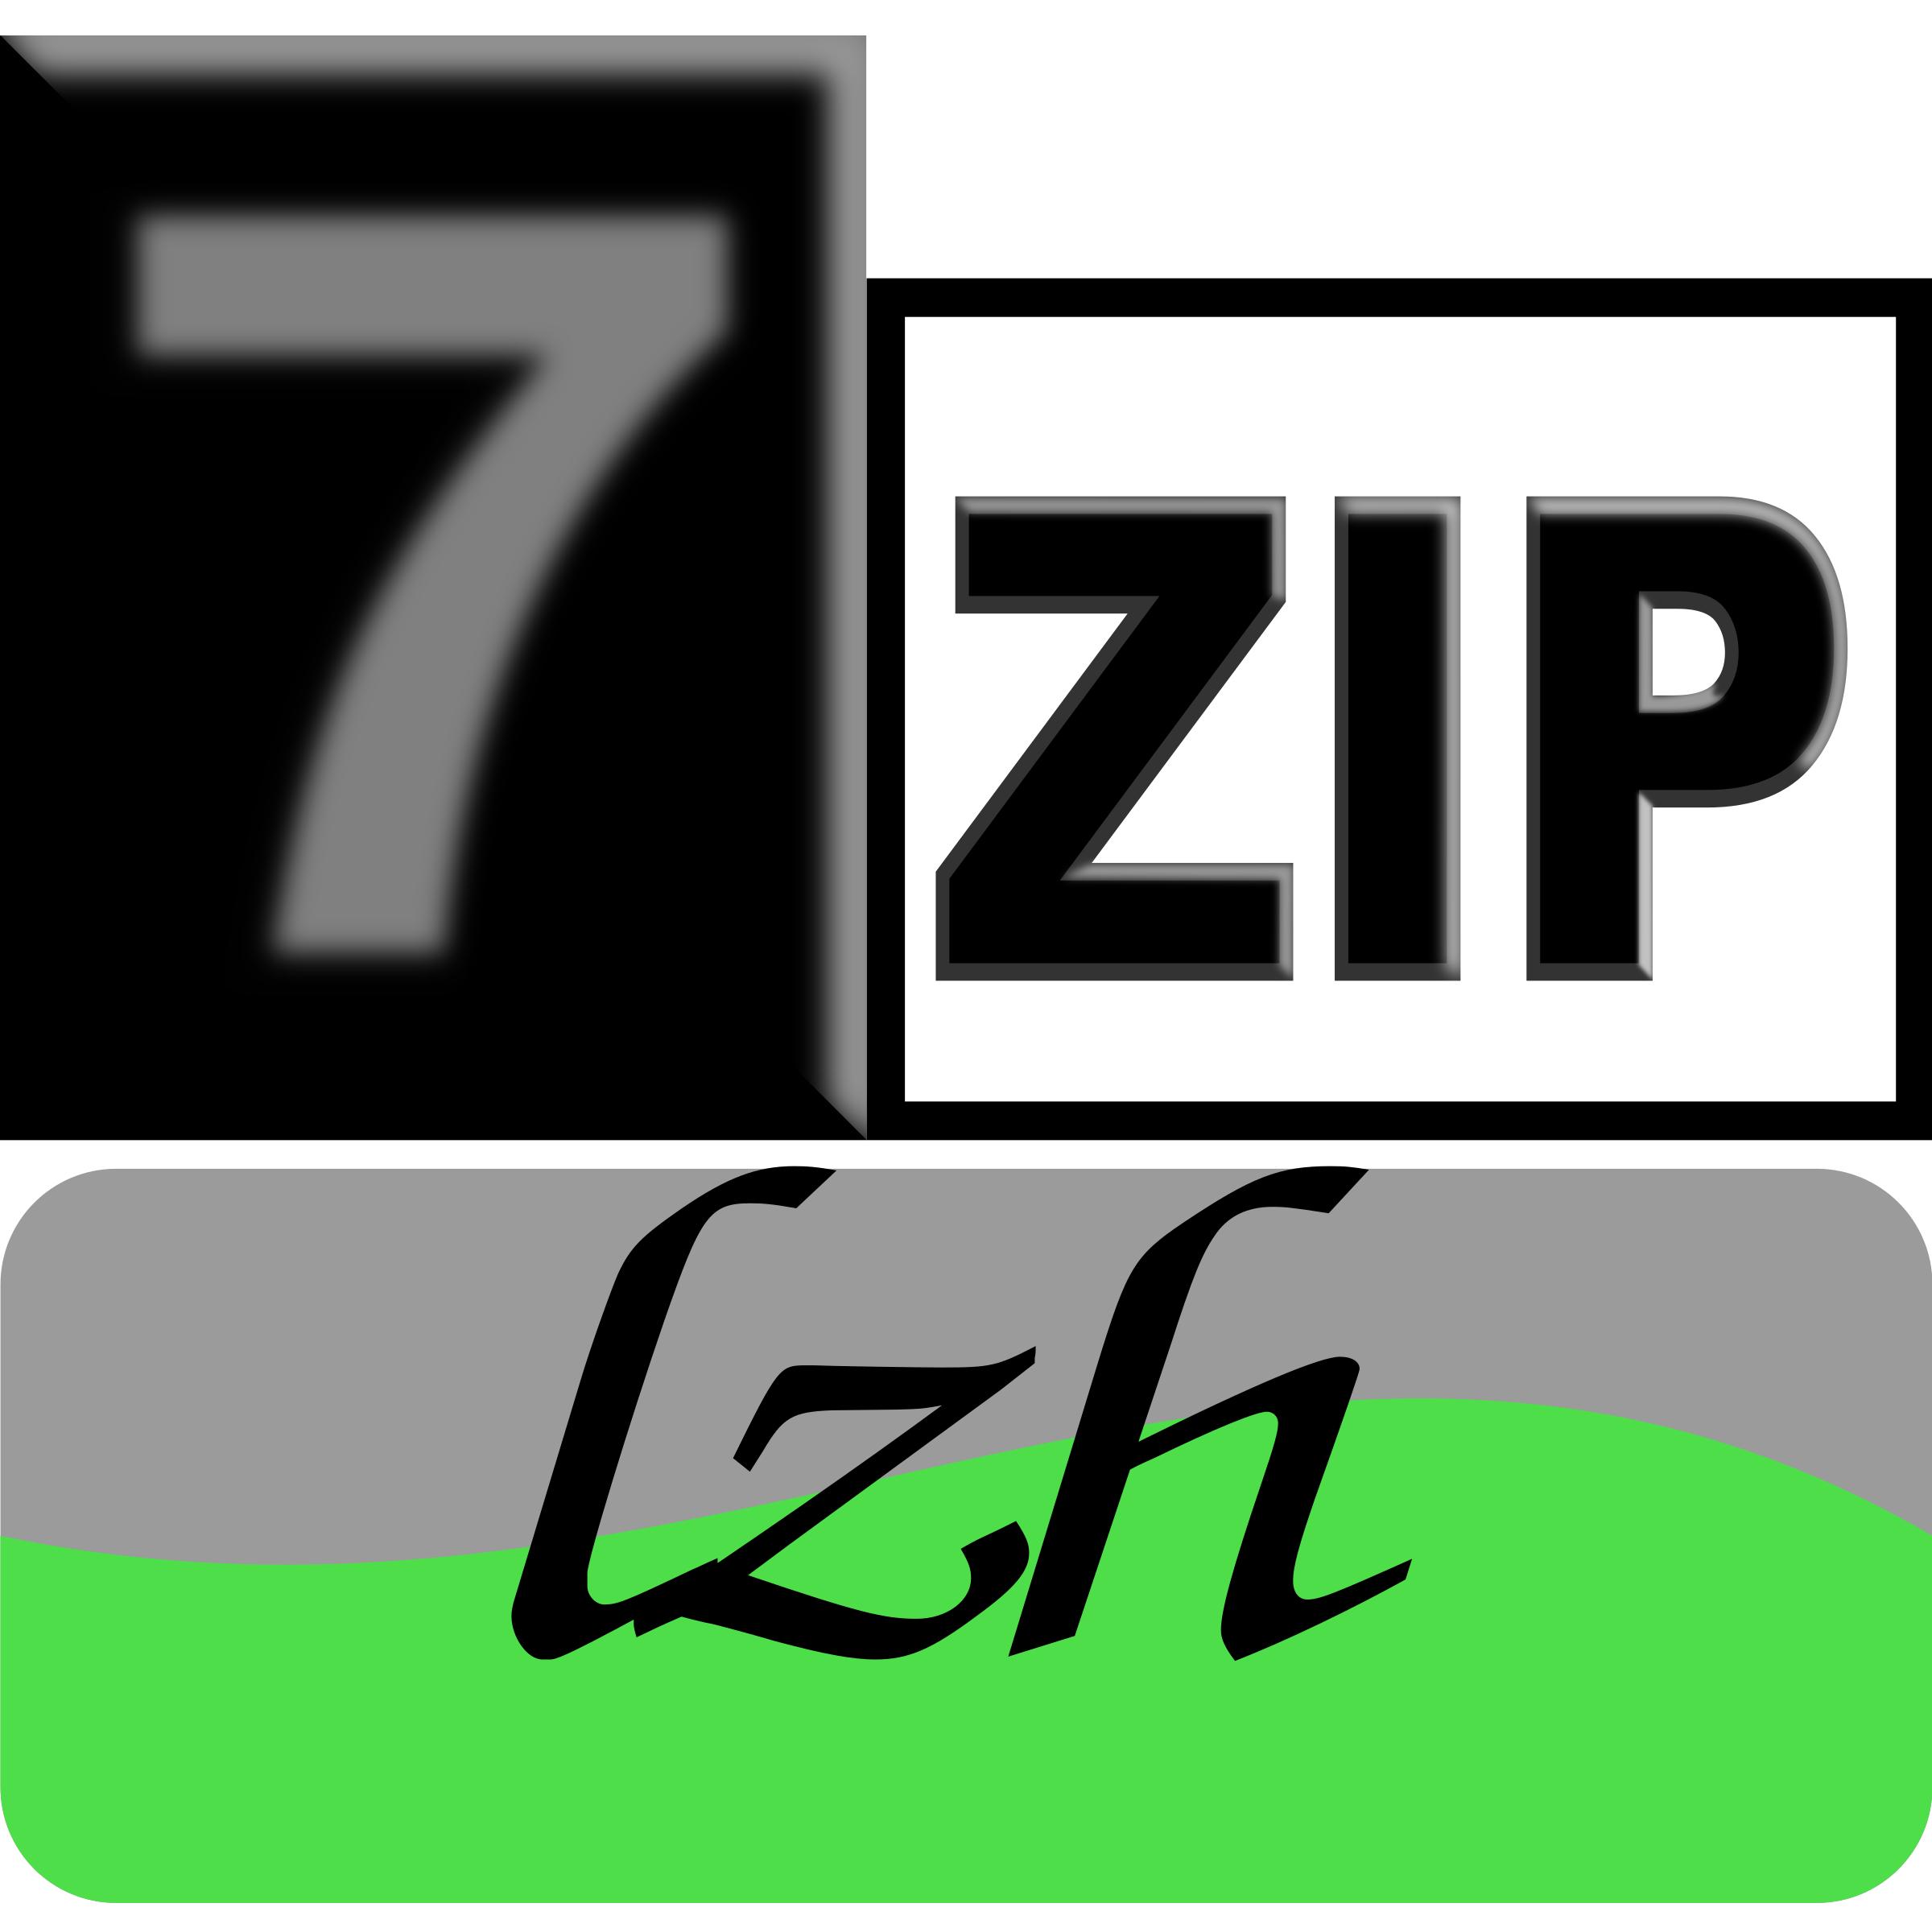 7zipClassic-lzh png